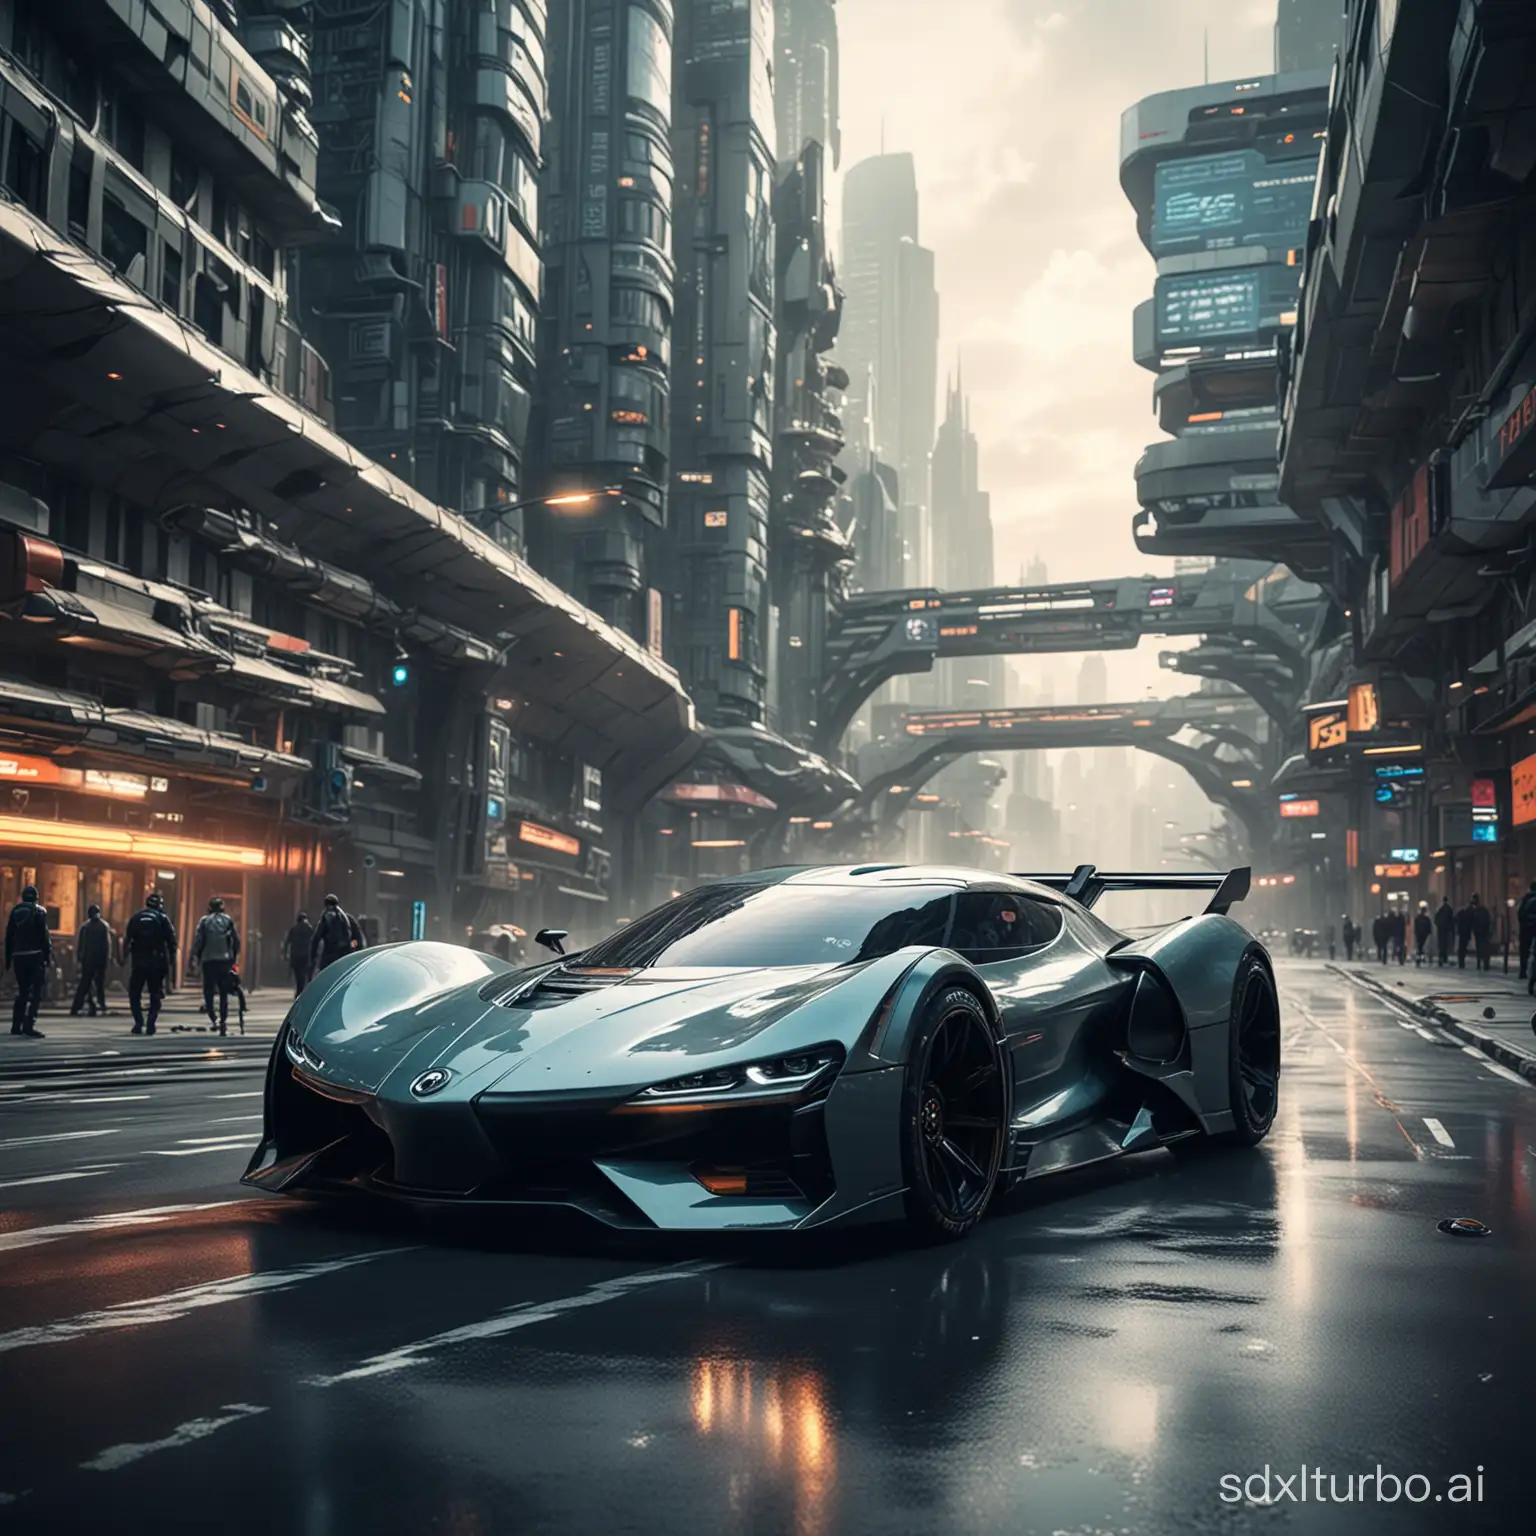 cinematic style, photo of a futuristic car racer on a futuristic city